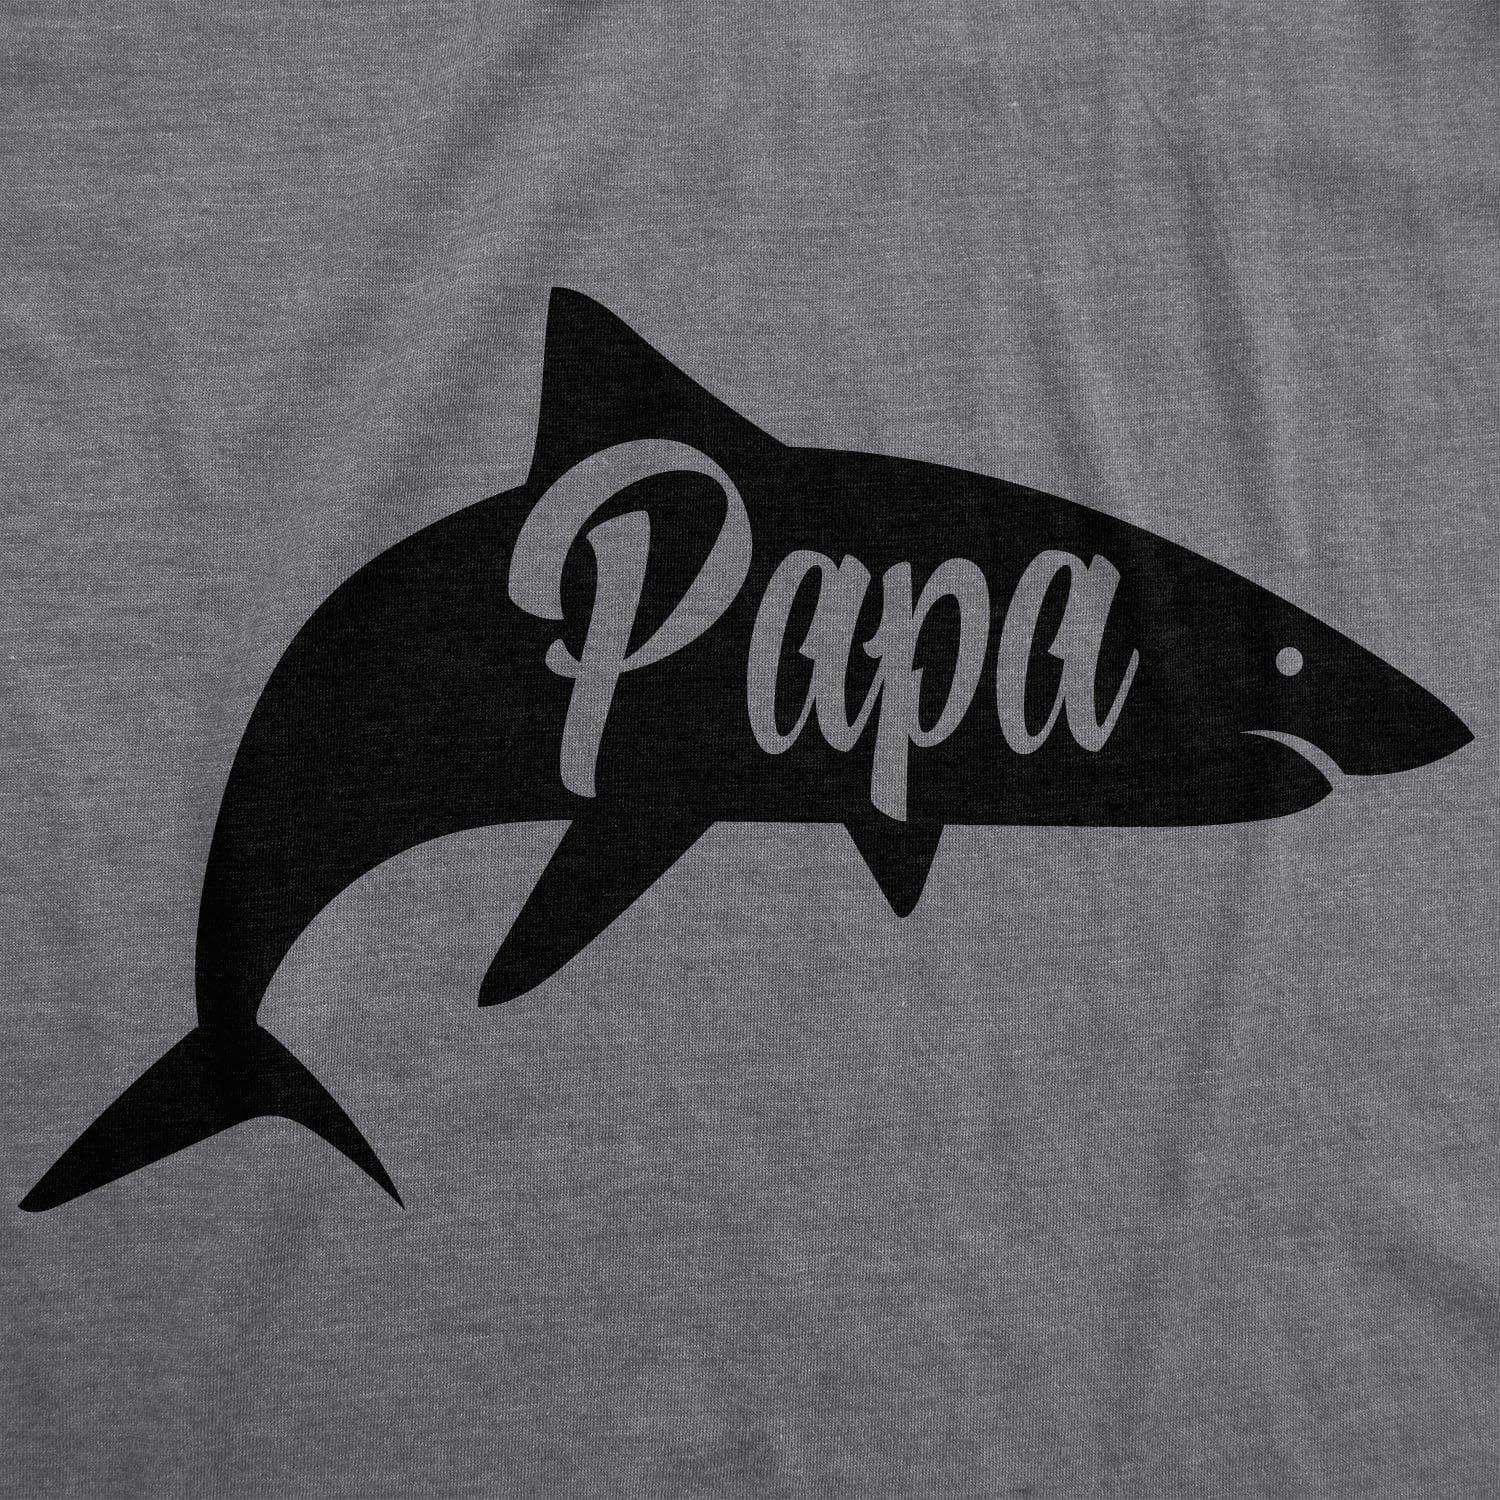 Papa Shark Men's Tshirt  -  Crazy Dog T-Shirts